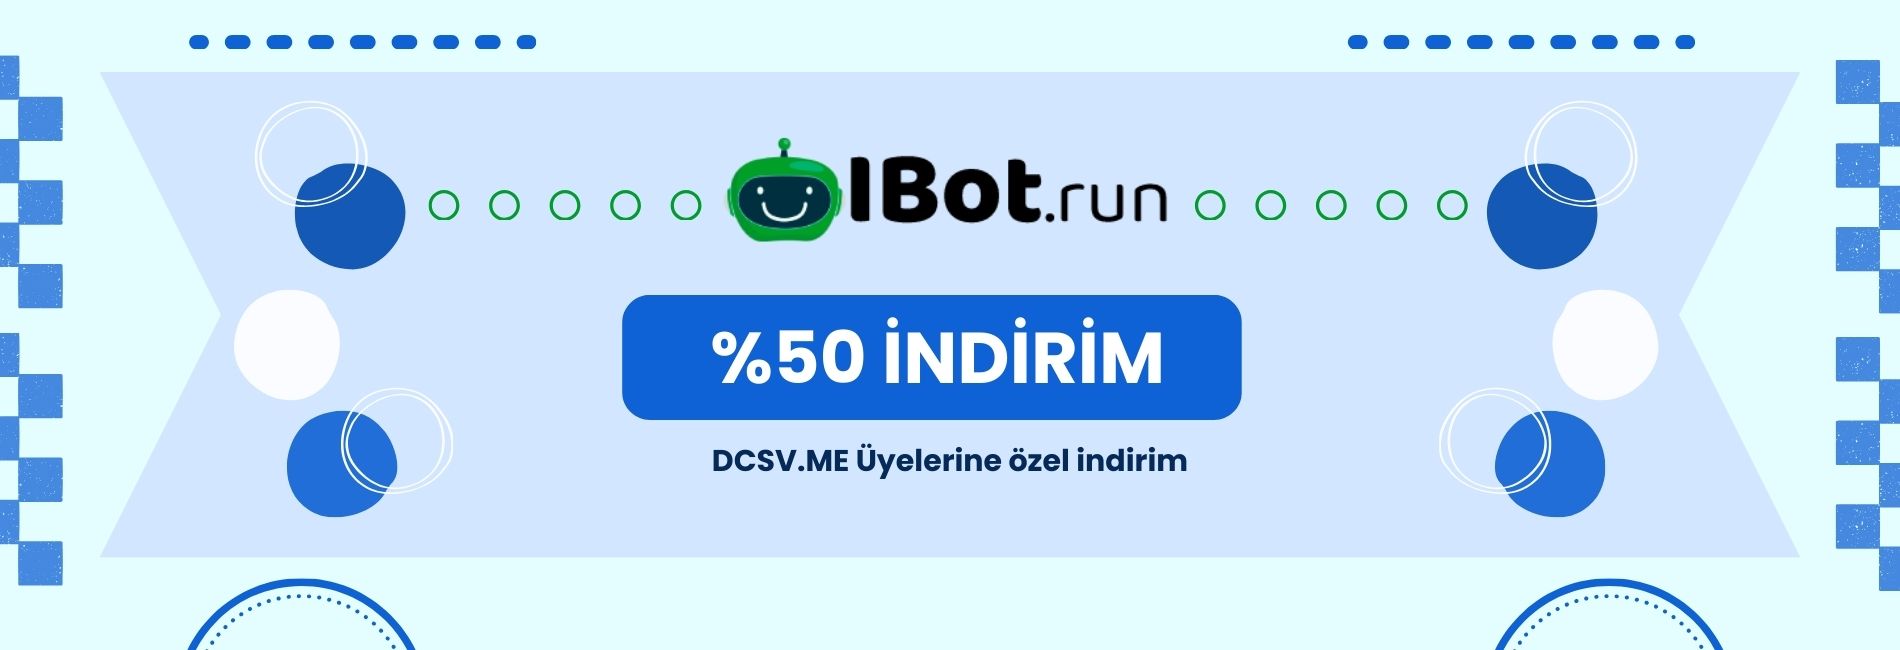 IBOT.run Premium %50 İndirim